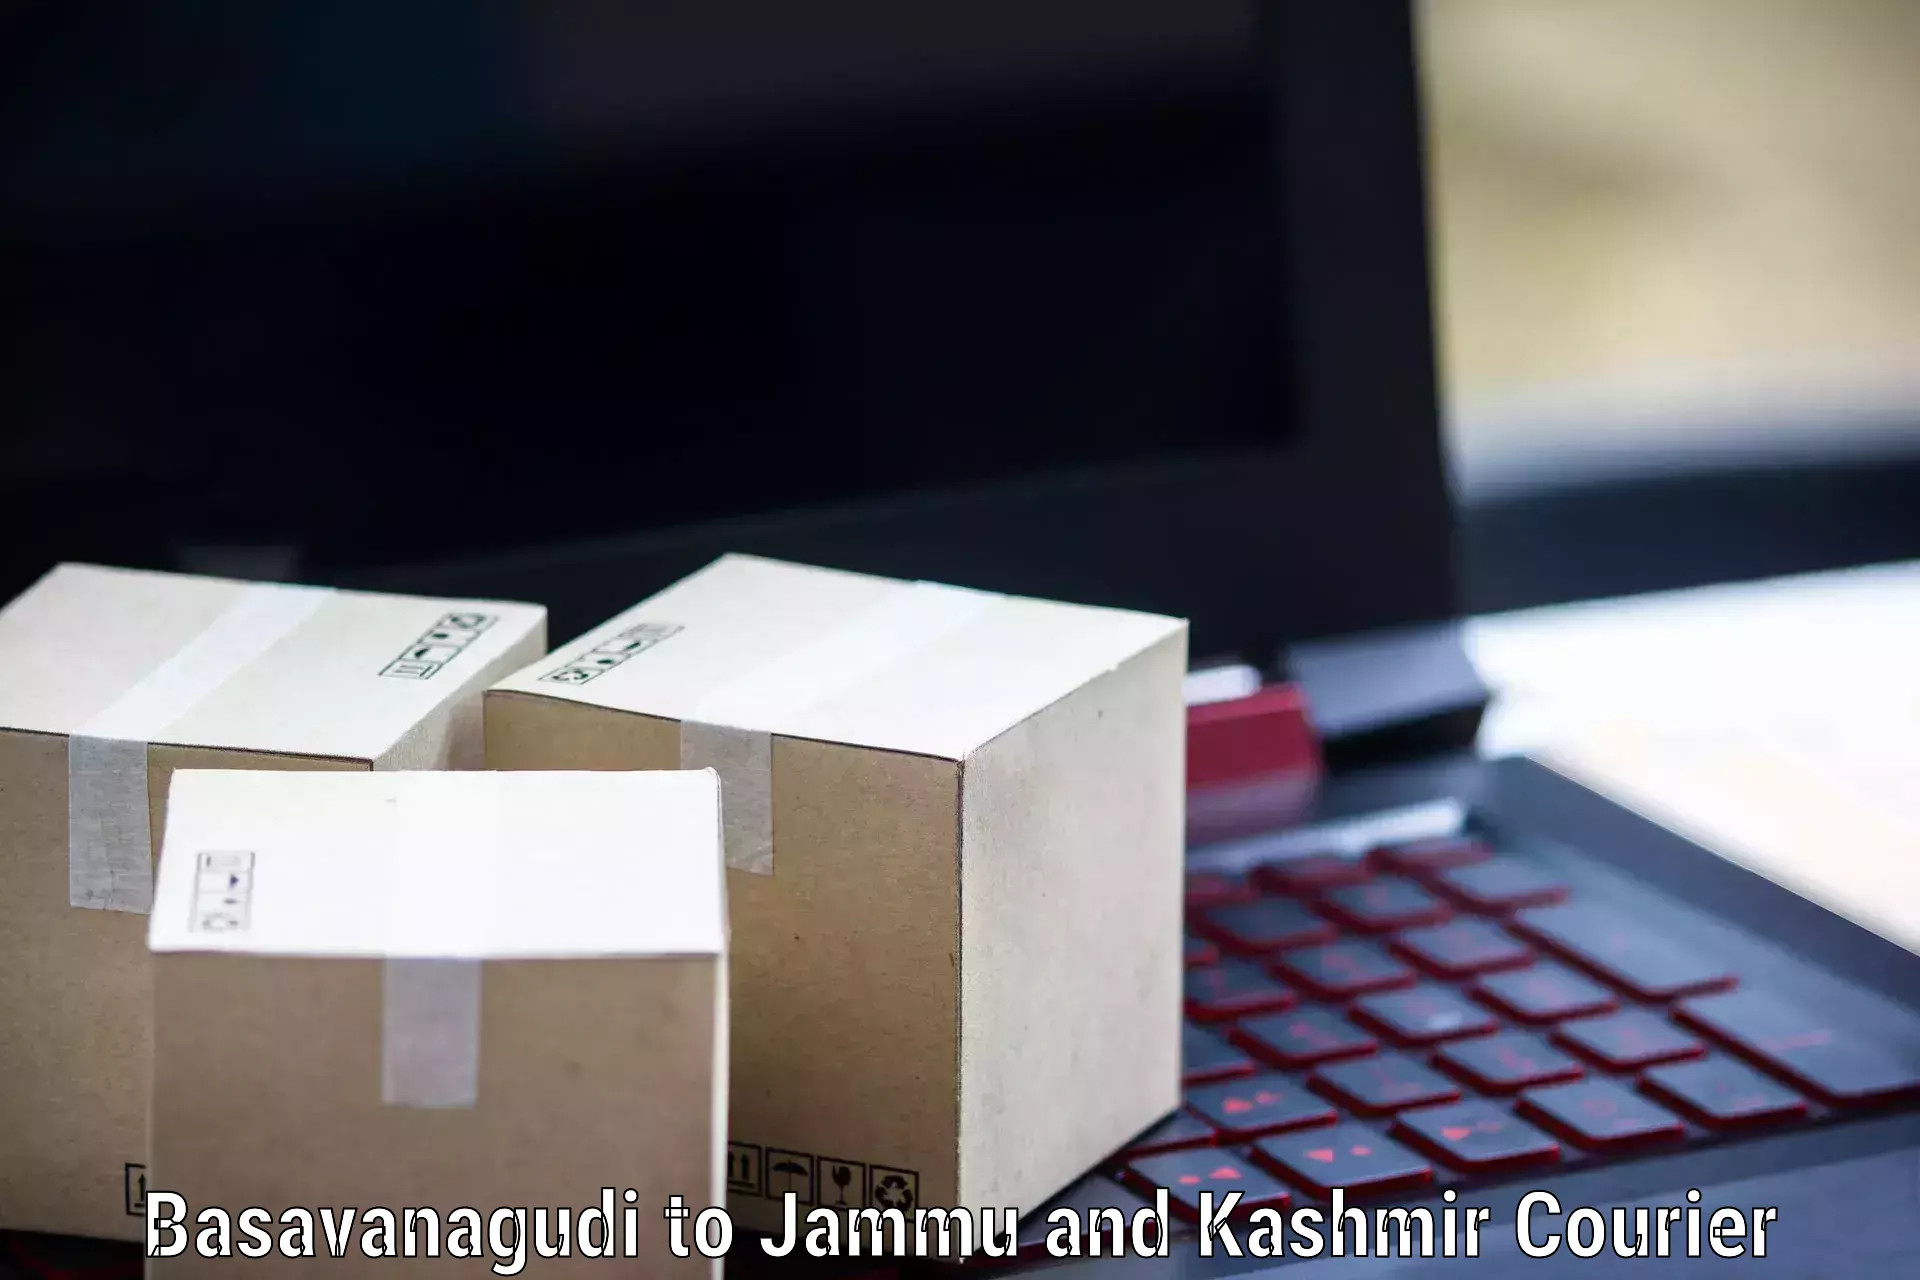 Logistics service provider Basavanagudi to Srinagar Kashmir